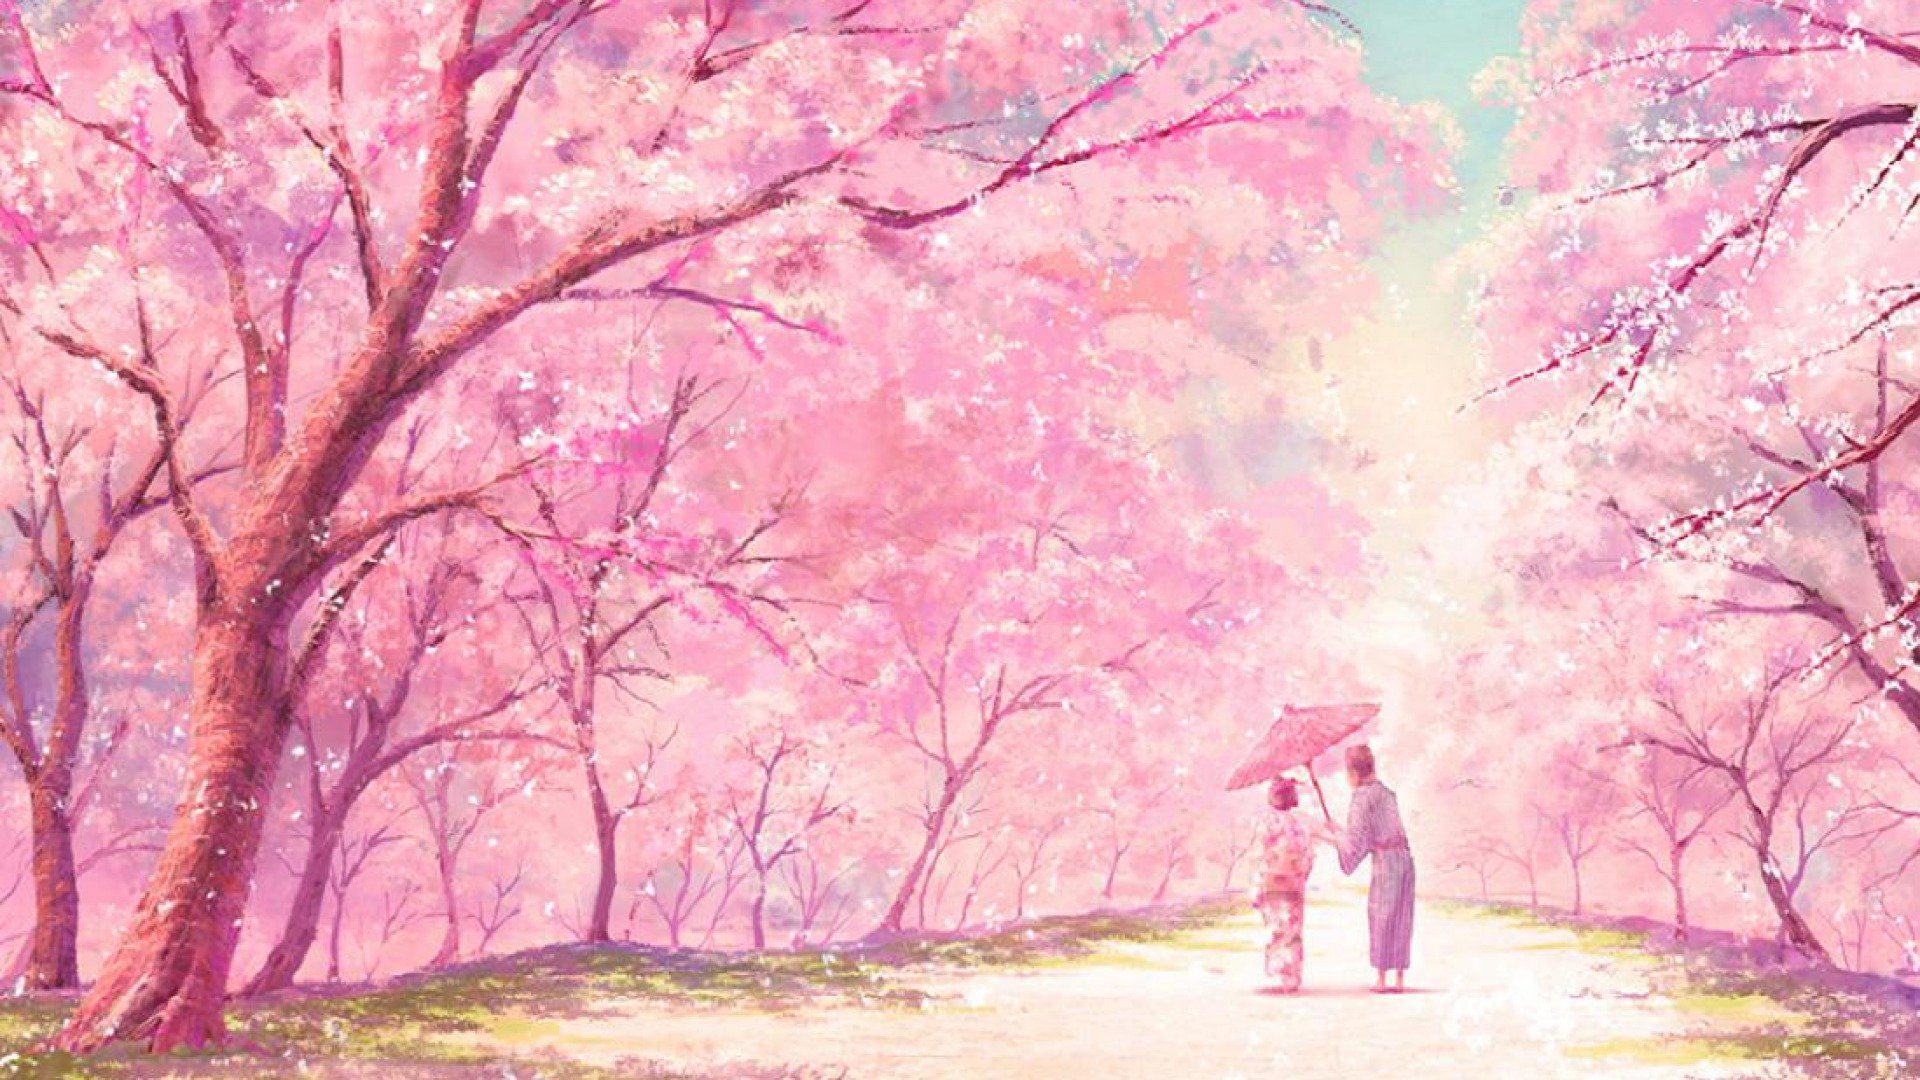 Pink Night - Other & Anime Background Wallpapers on Desktop Nexus (Image  2513298)